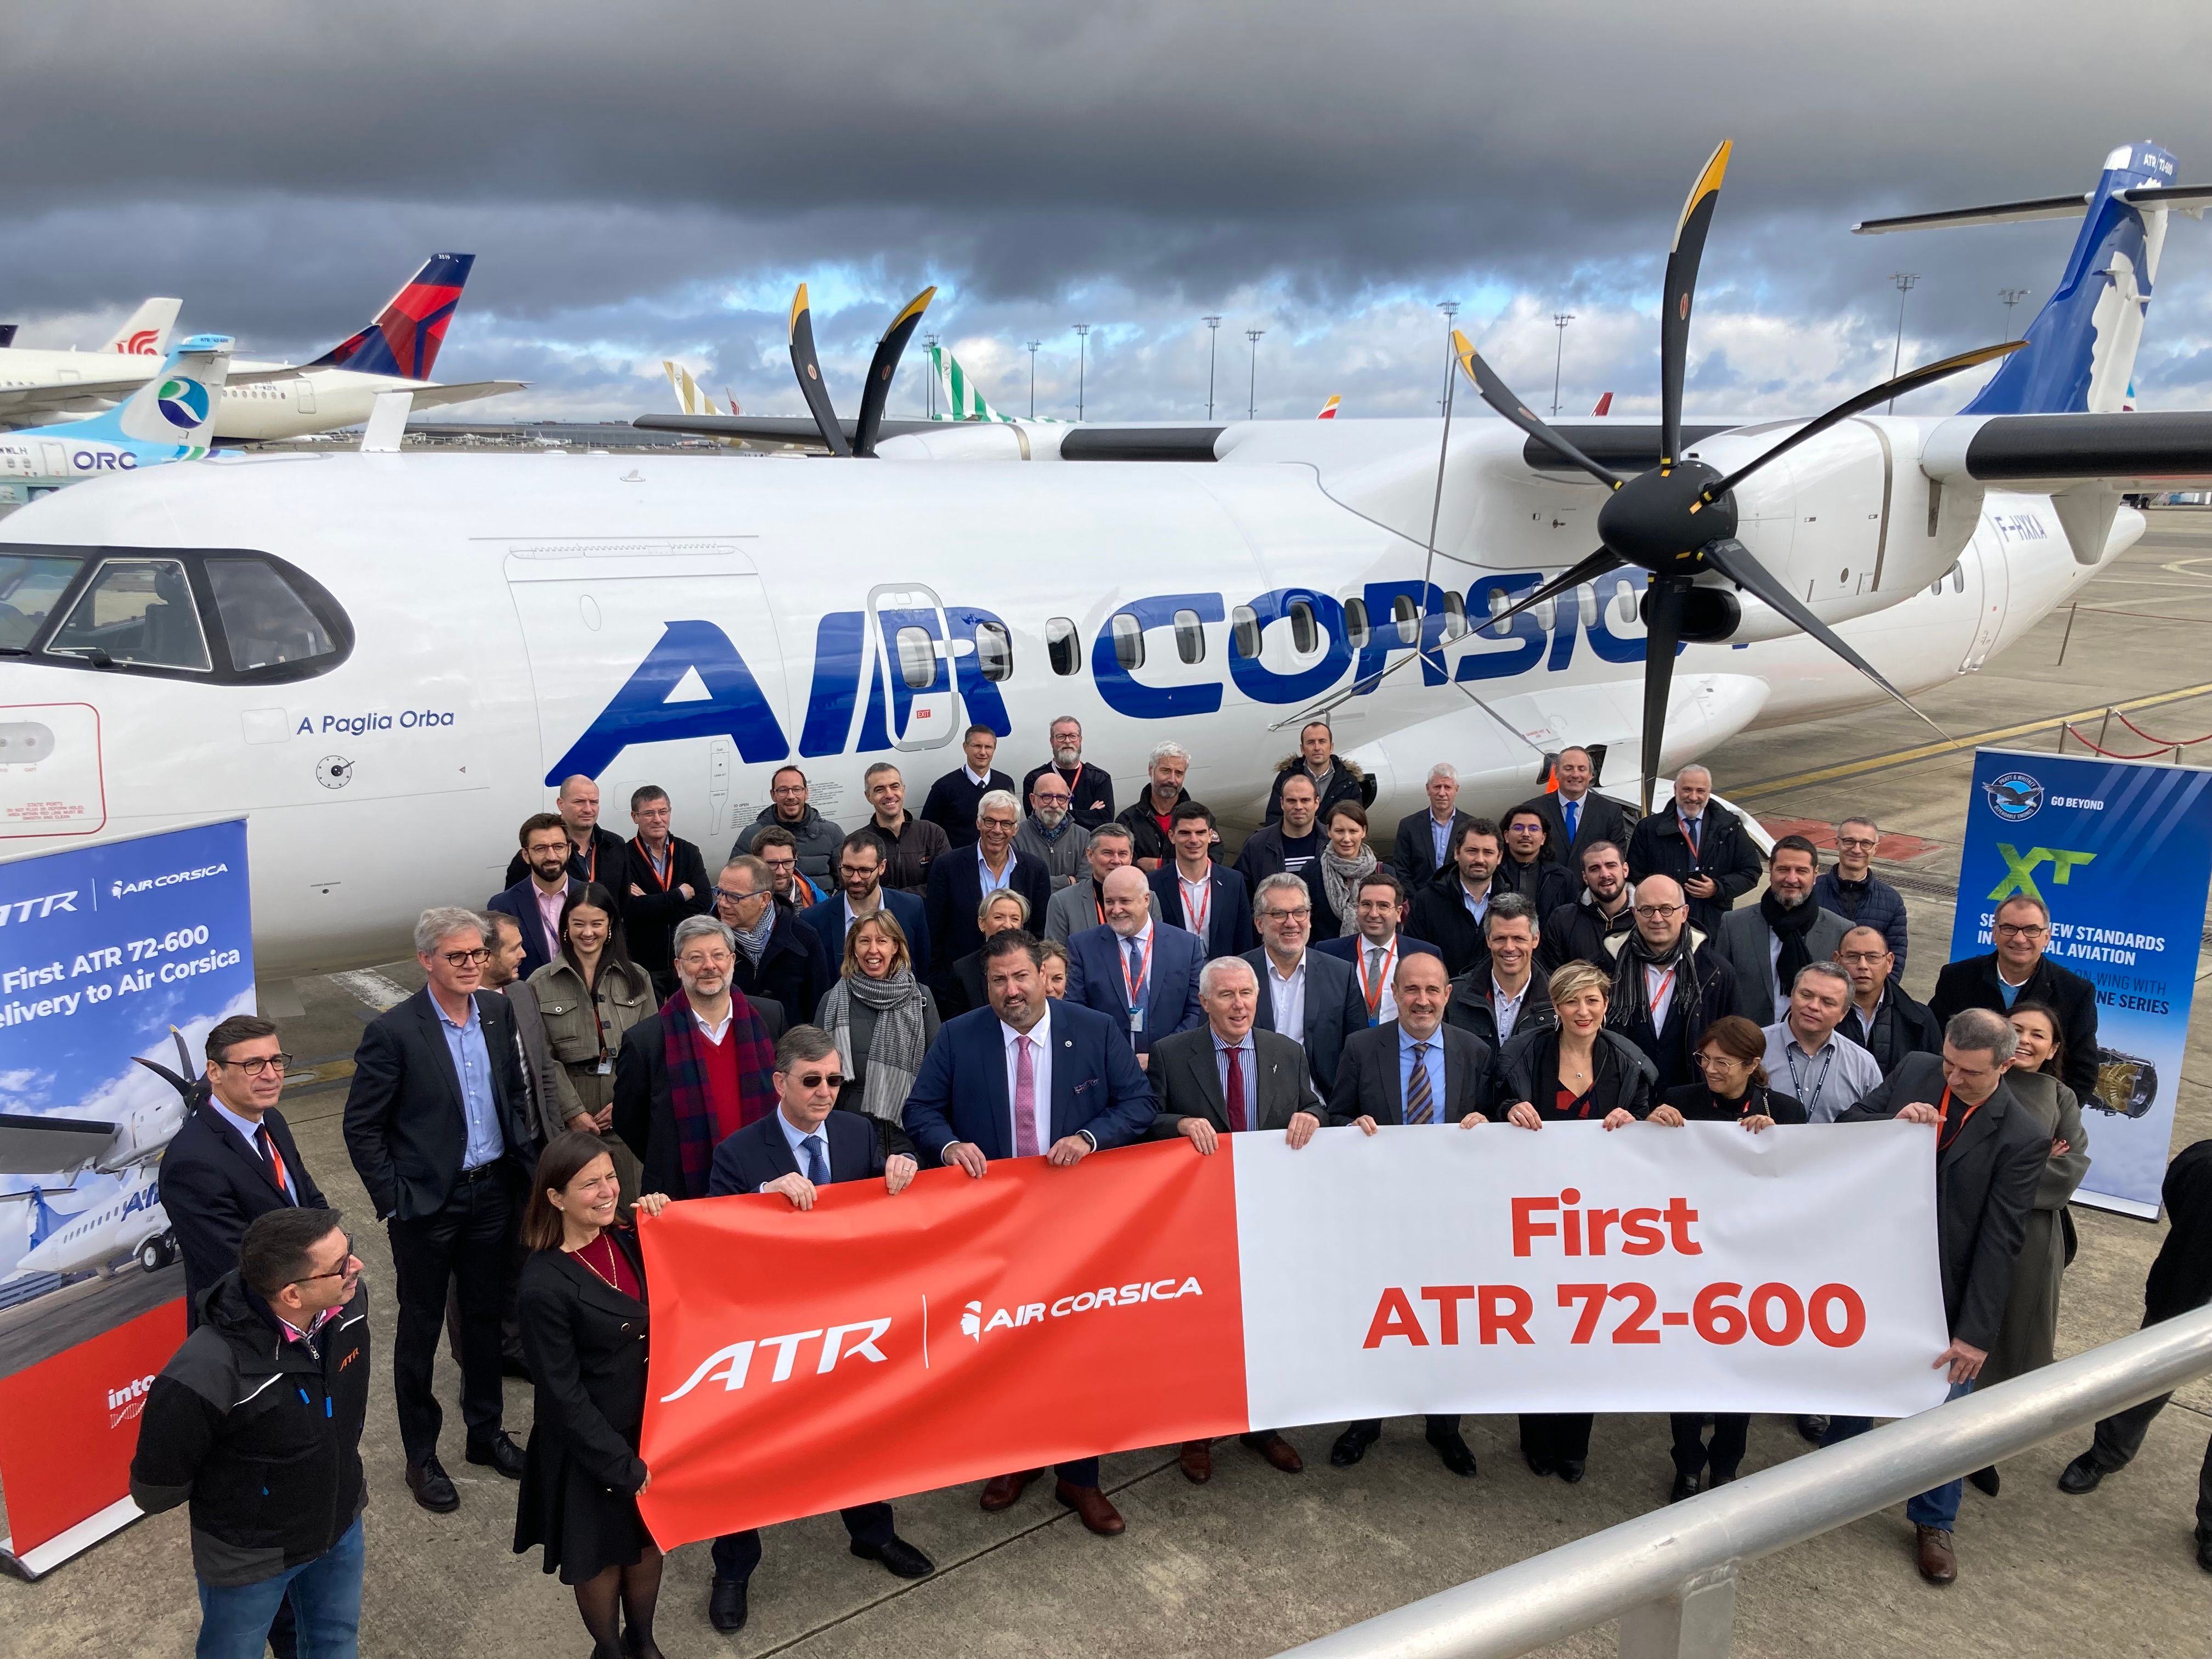 Air Corsica First ATR 72-600